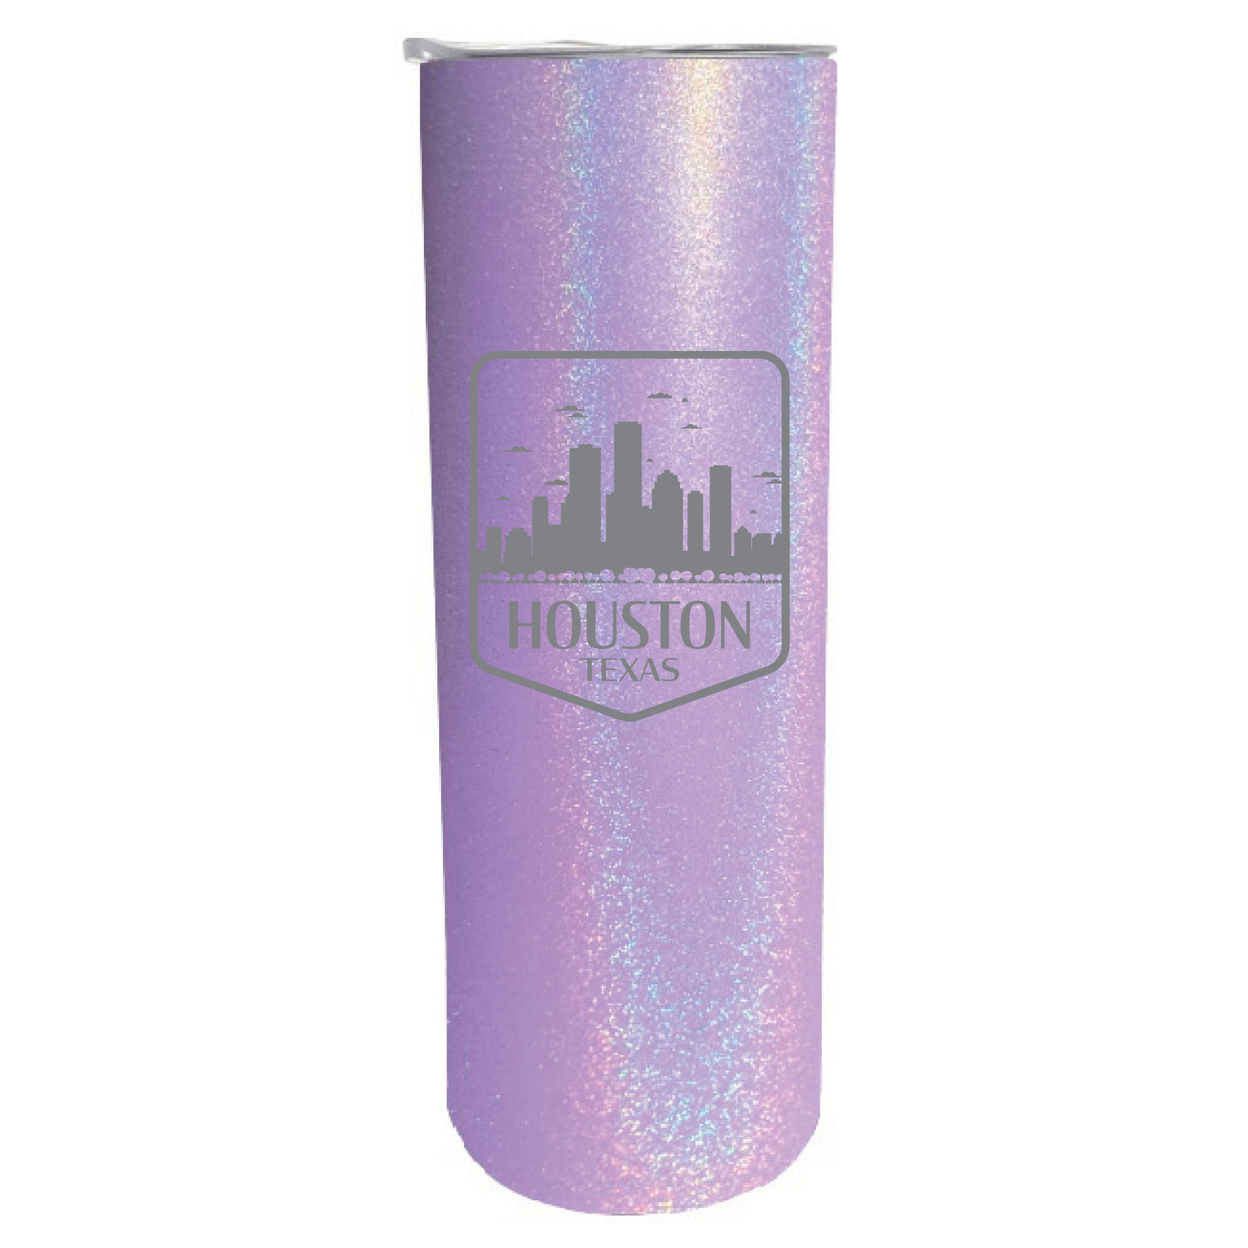 Houston Texas Souvenir 20 Oz Engraved Insulated Stainless Steel Skinny Tumbler - Purple Glitter,,Single Unit